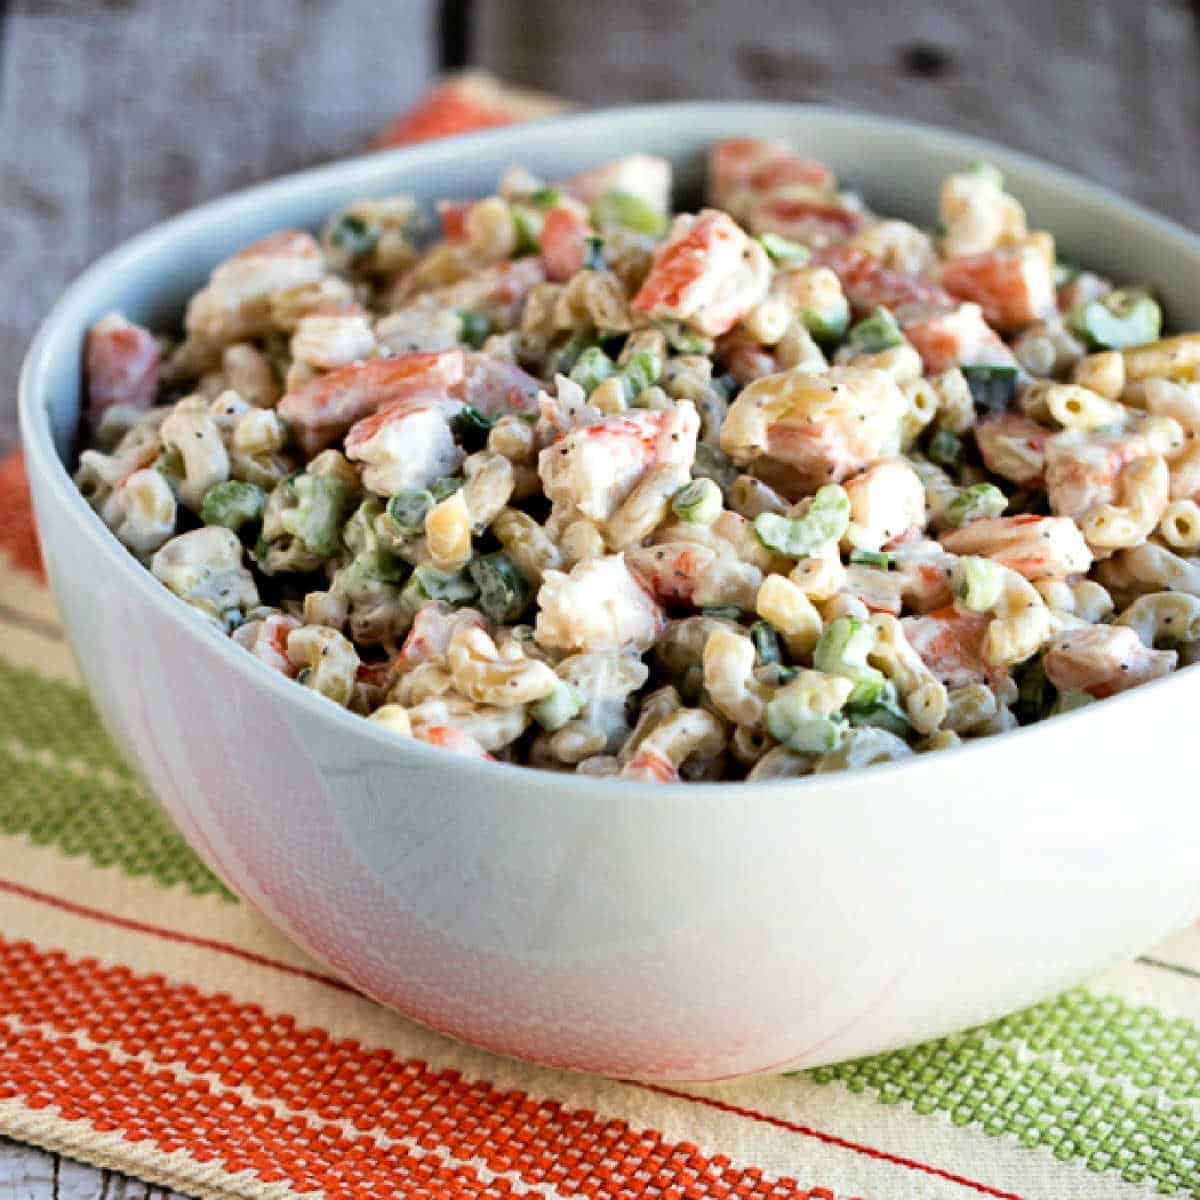 Square image of Family Favorite Shrimp and Macaroni Salad shown in serving bowl on napkin.